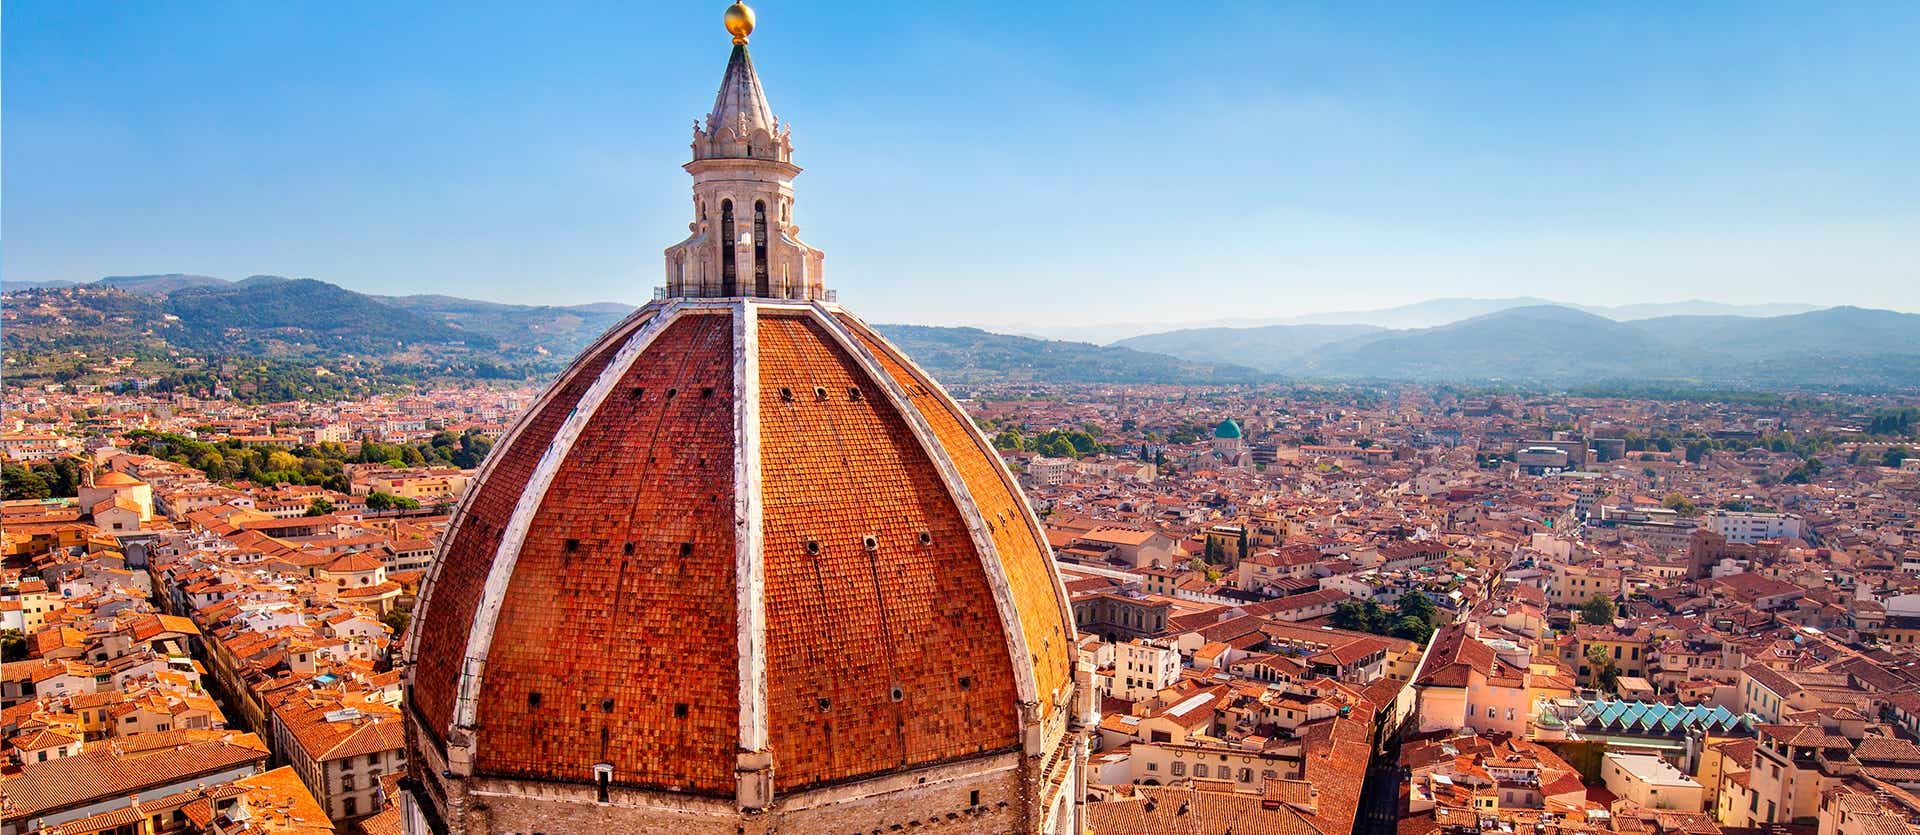 Dome of the Cathedral Santa Maria del Fiore <span class="iconos separador"></span> Florence